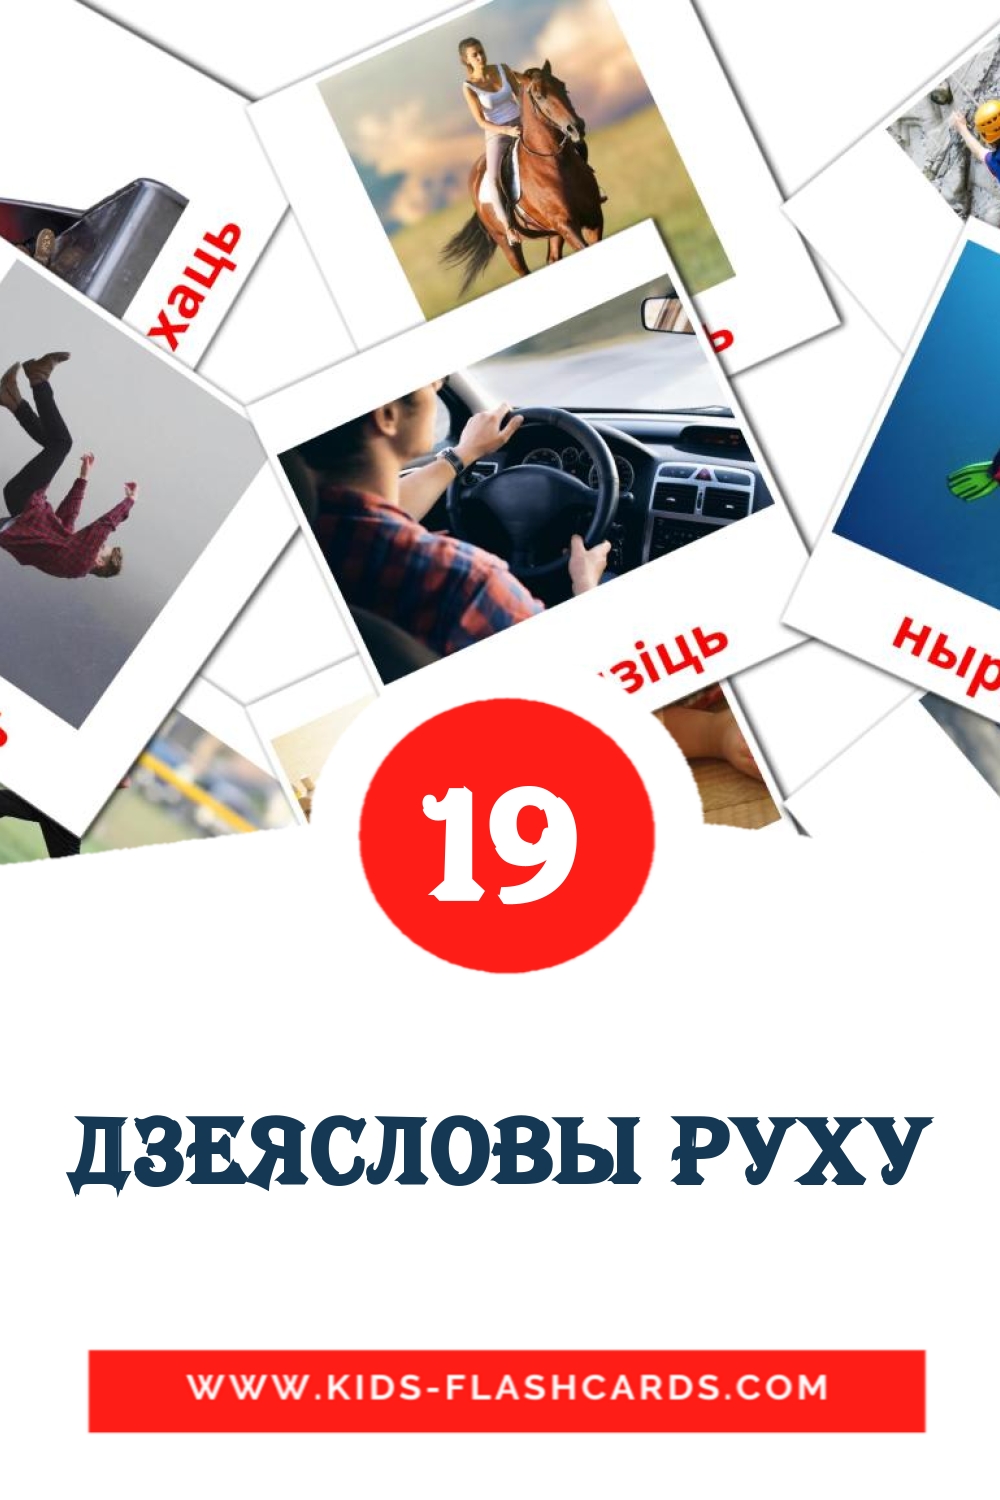 19 carte illustrate di дзеясловы руху per la scuola materna in bielorusso